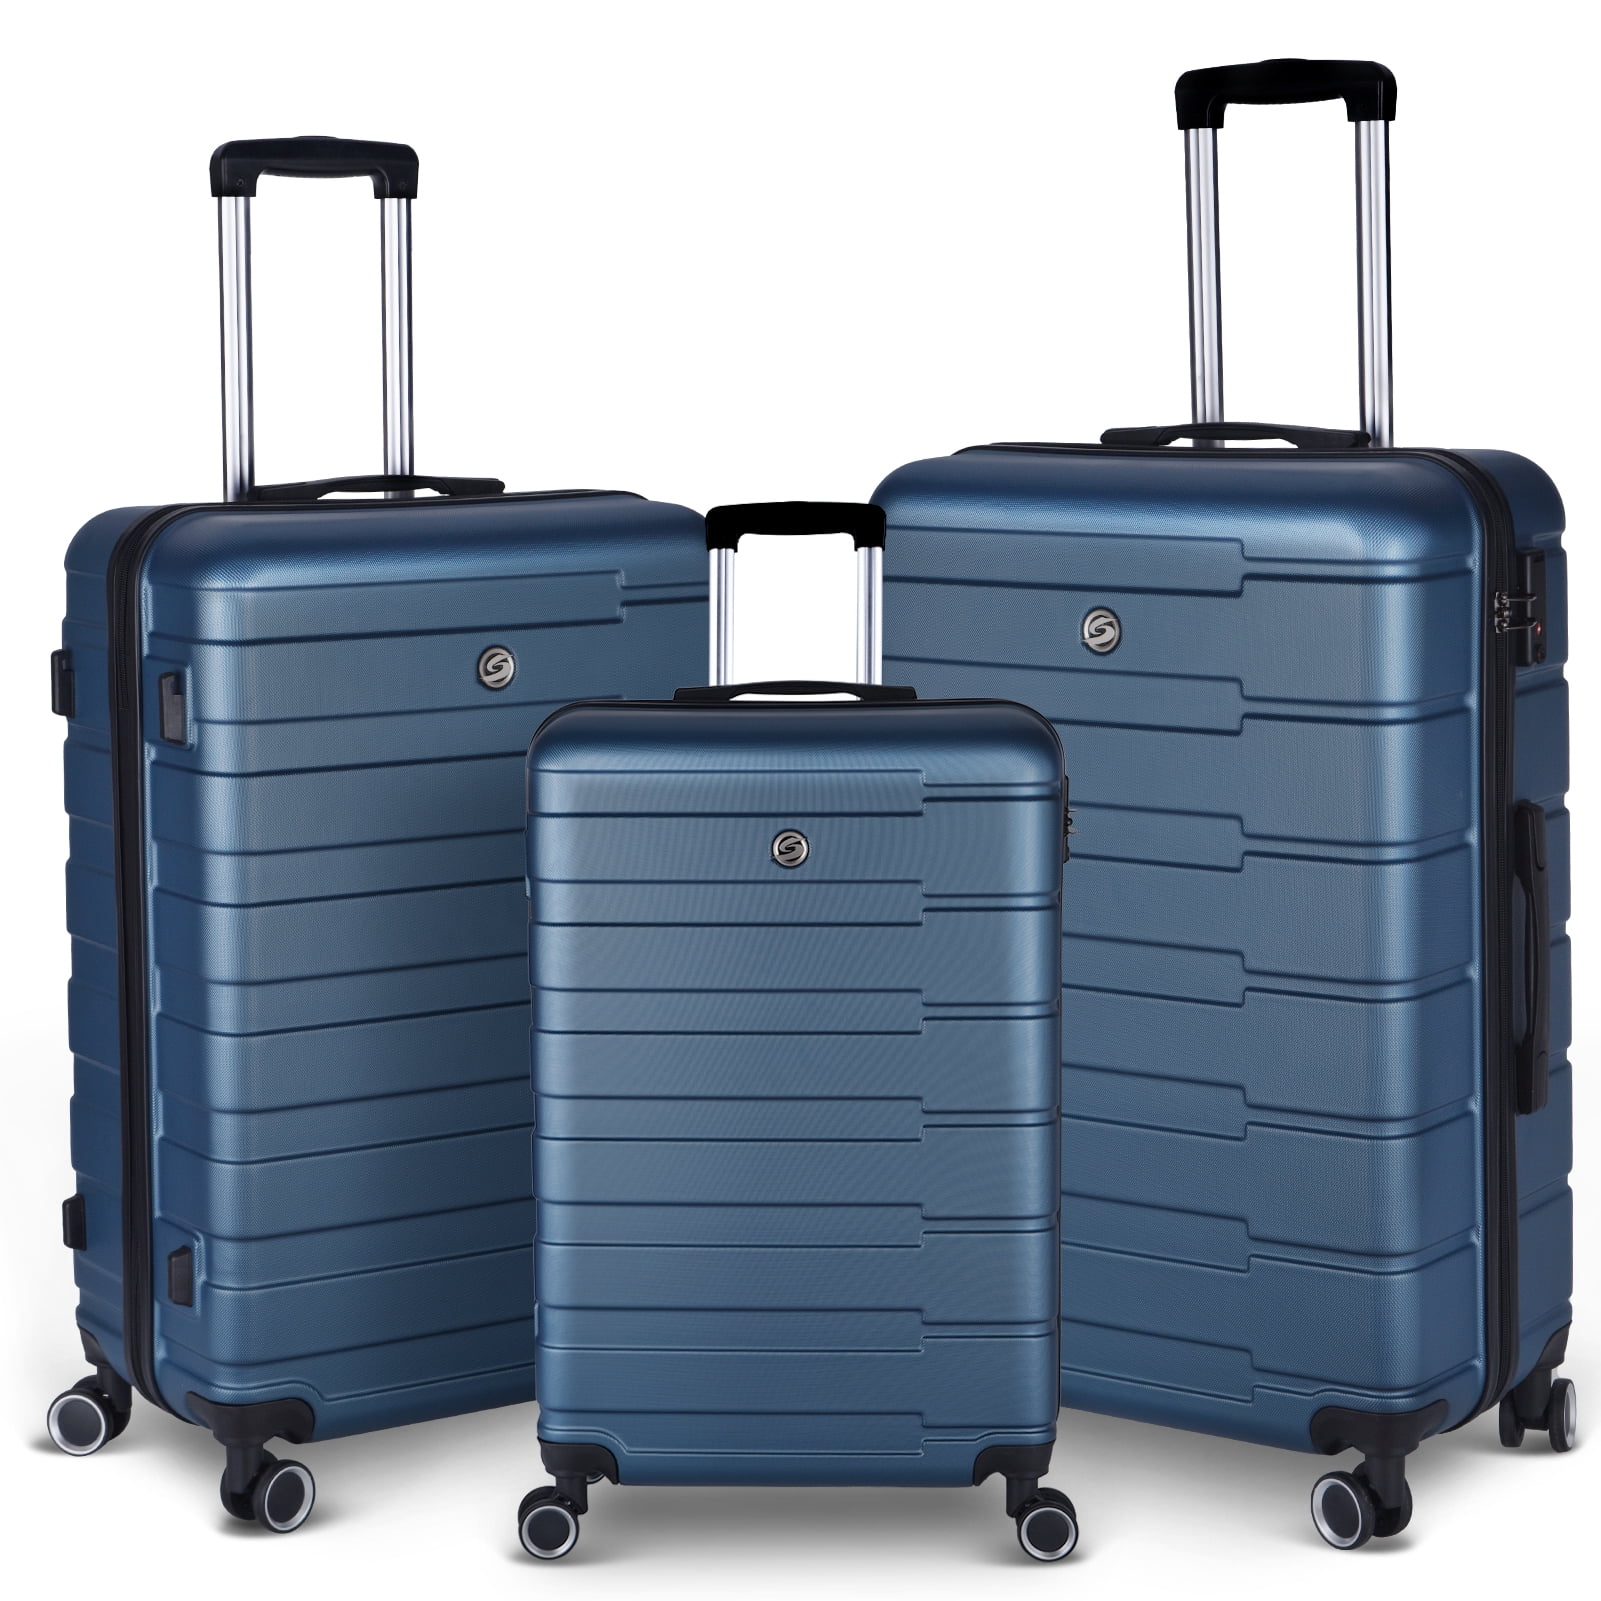 3 Piece Luggage Sets, Luxurious Texture Finish Hard Shell Luggage ...